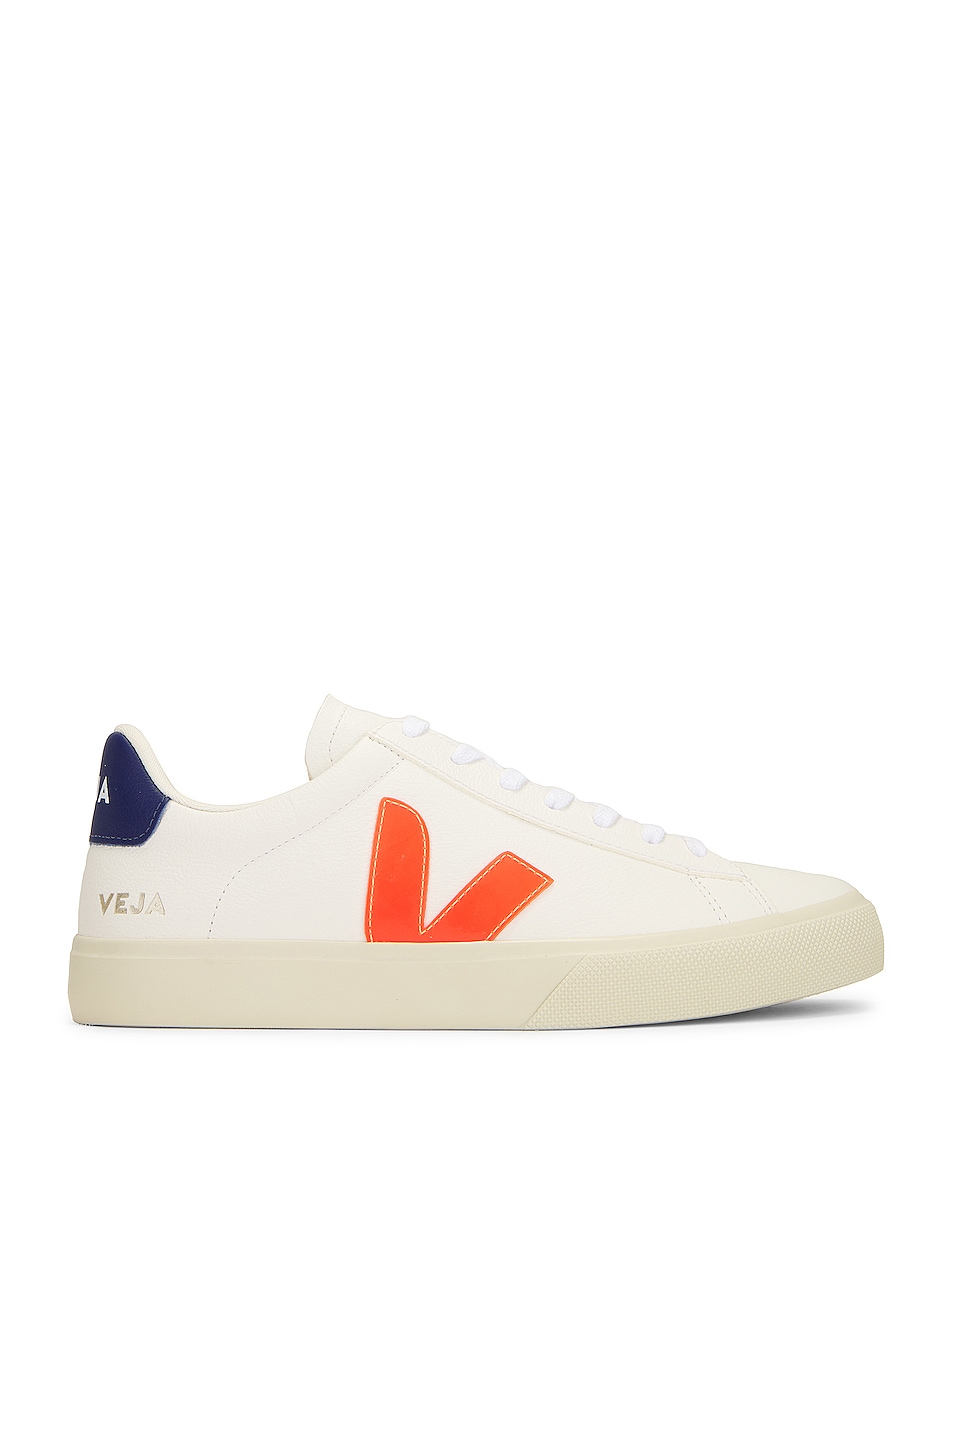 Image 1 of Veja Campo Sneaker in Extra White, Orange, & Fluo Cobalt